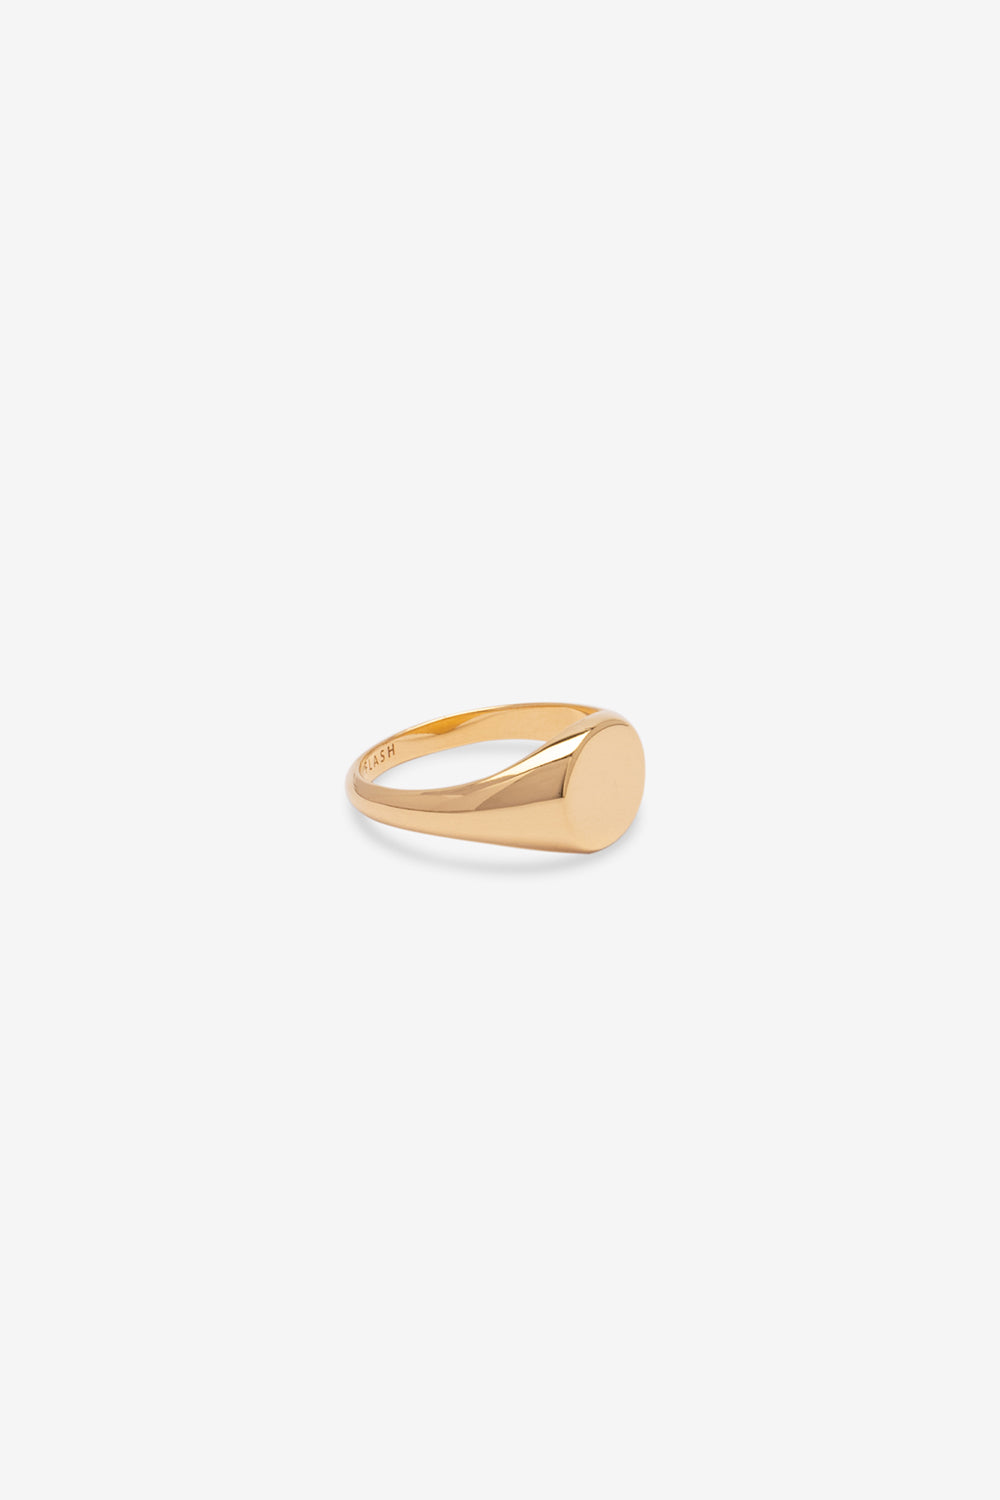 Flash Jewellery Classic Signet Ring, 9k Gold